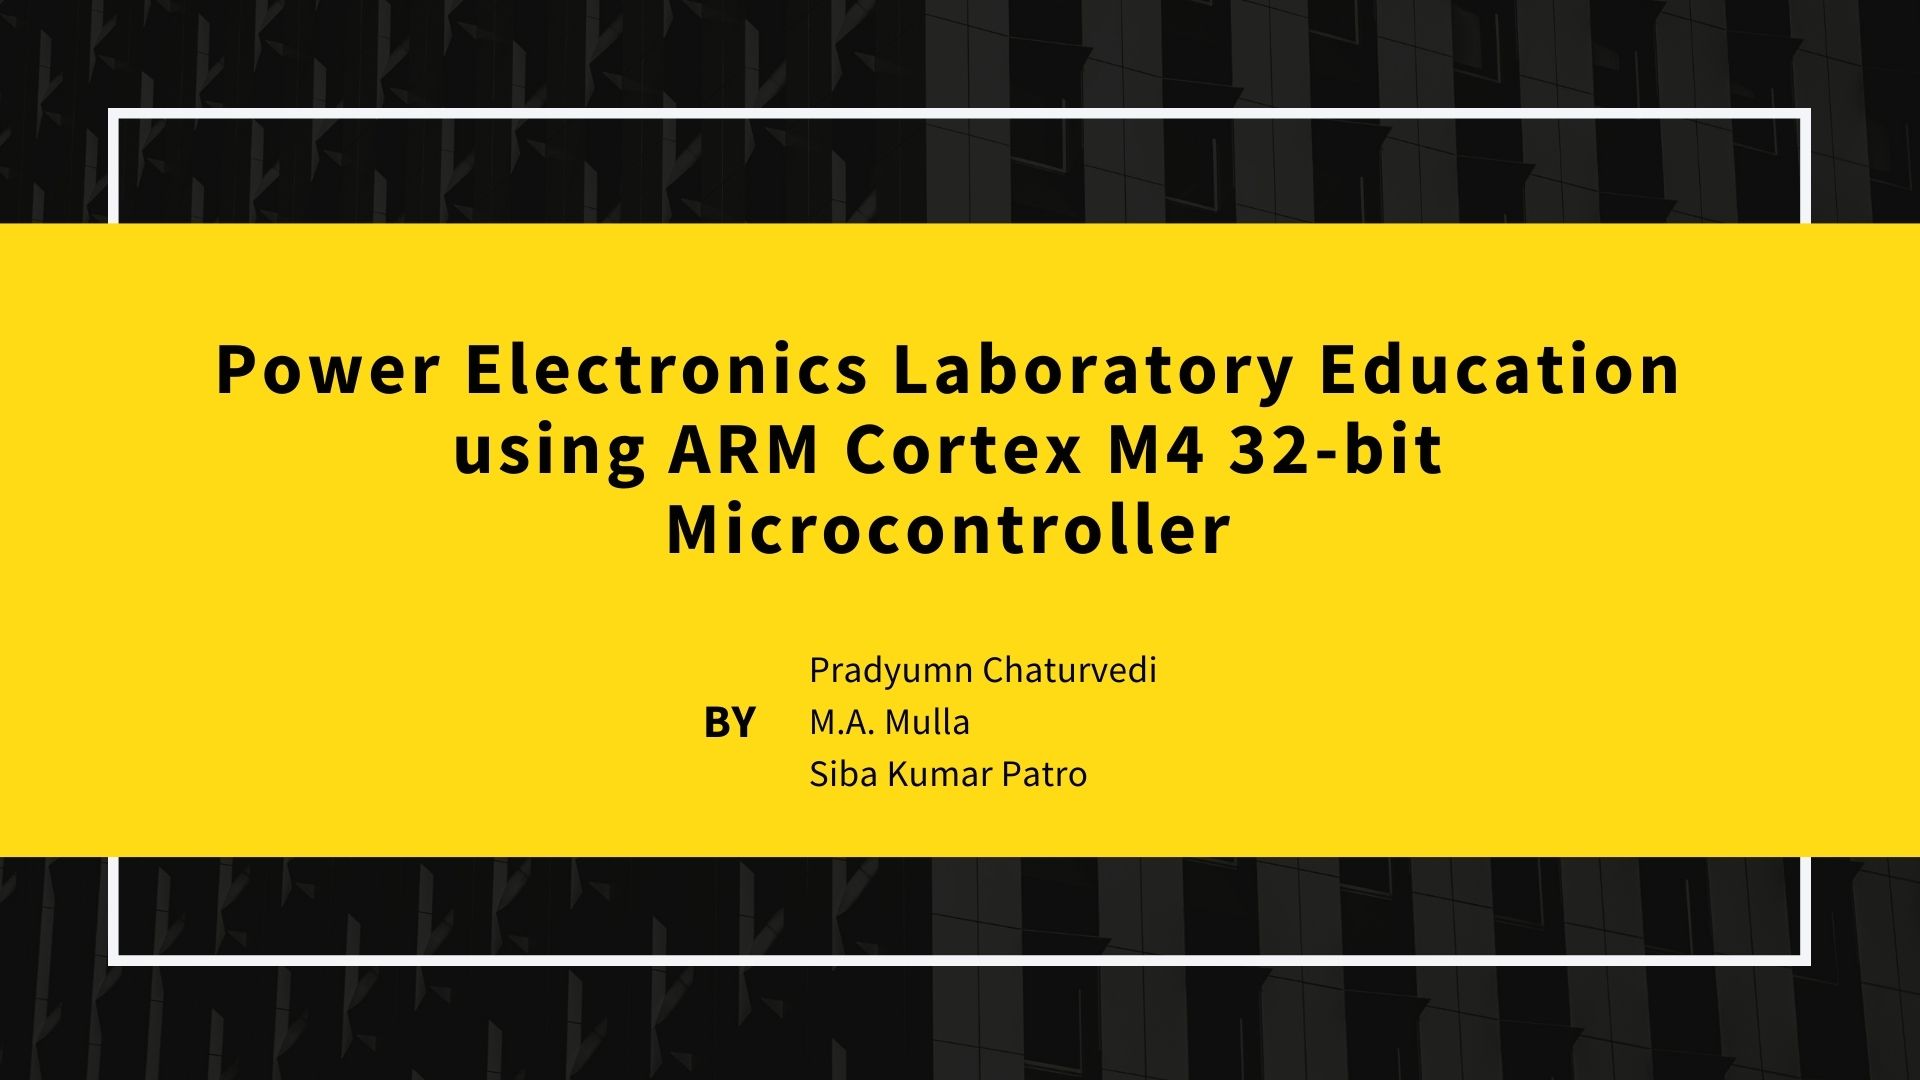 Power Electronics Laboratory Education using ARM Cortex M4 32-bit Microcontroller